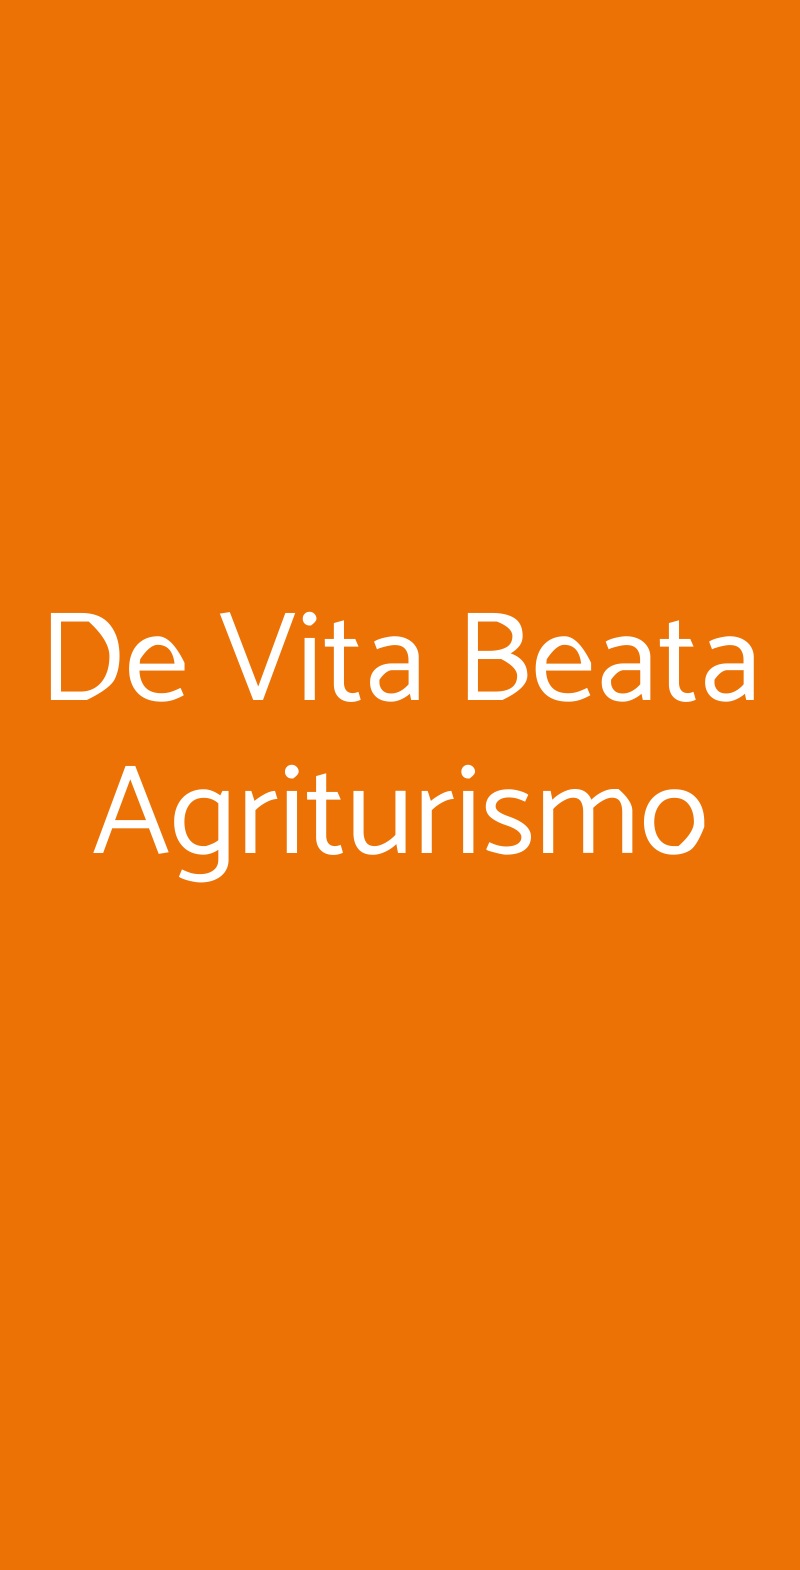 De Vita Beata Agriturismo Veroli menù 1 pagina